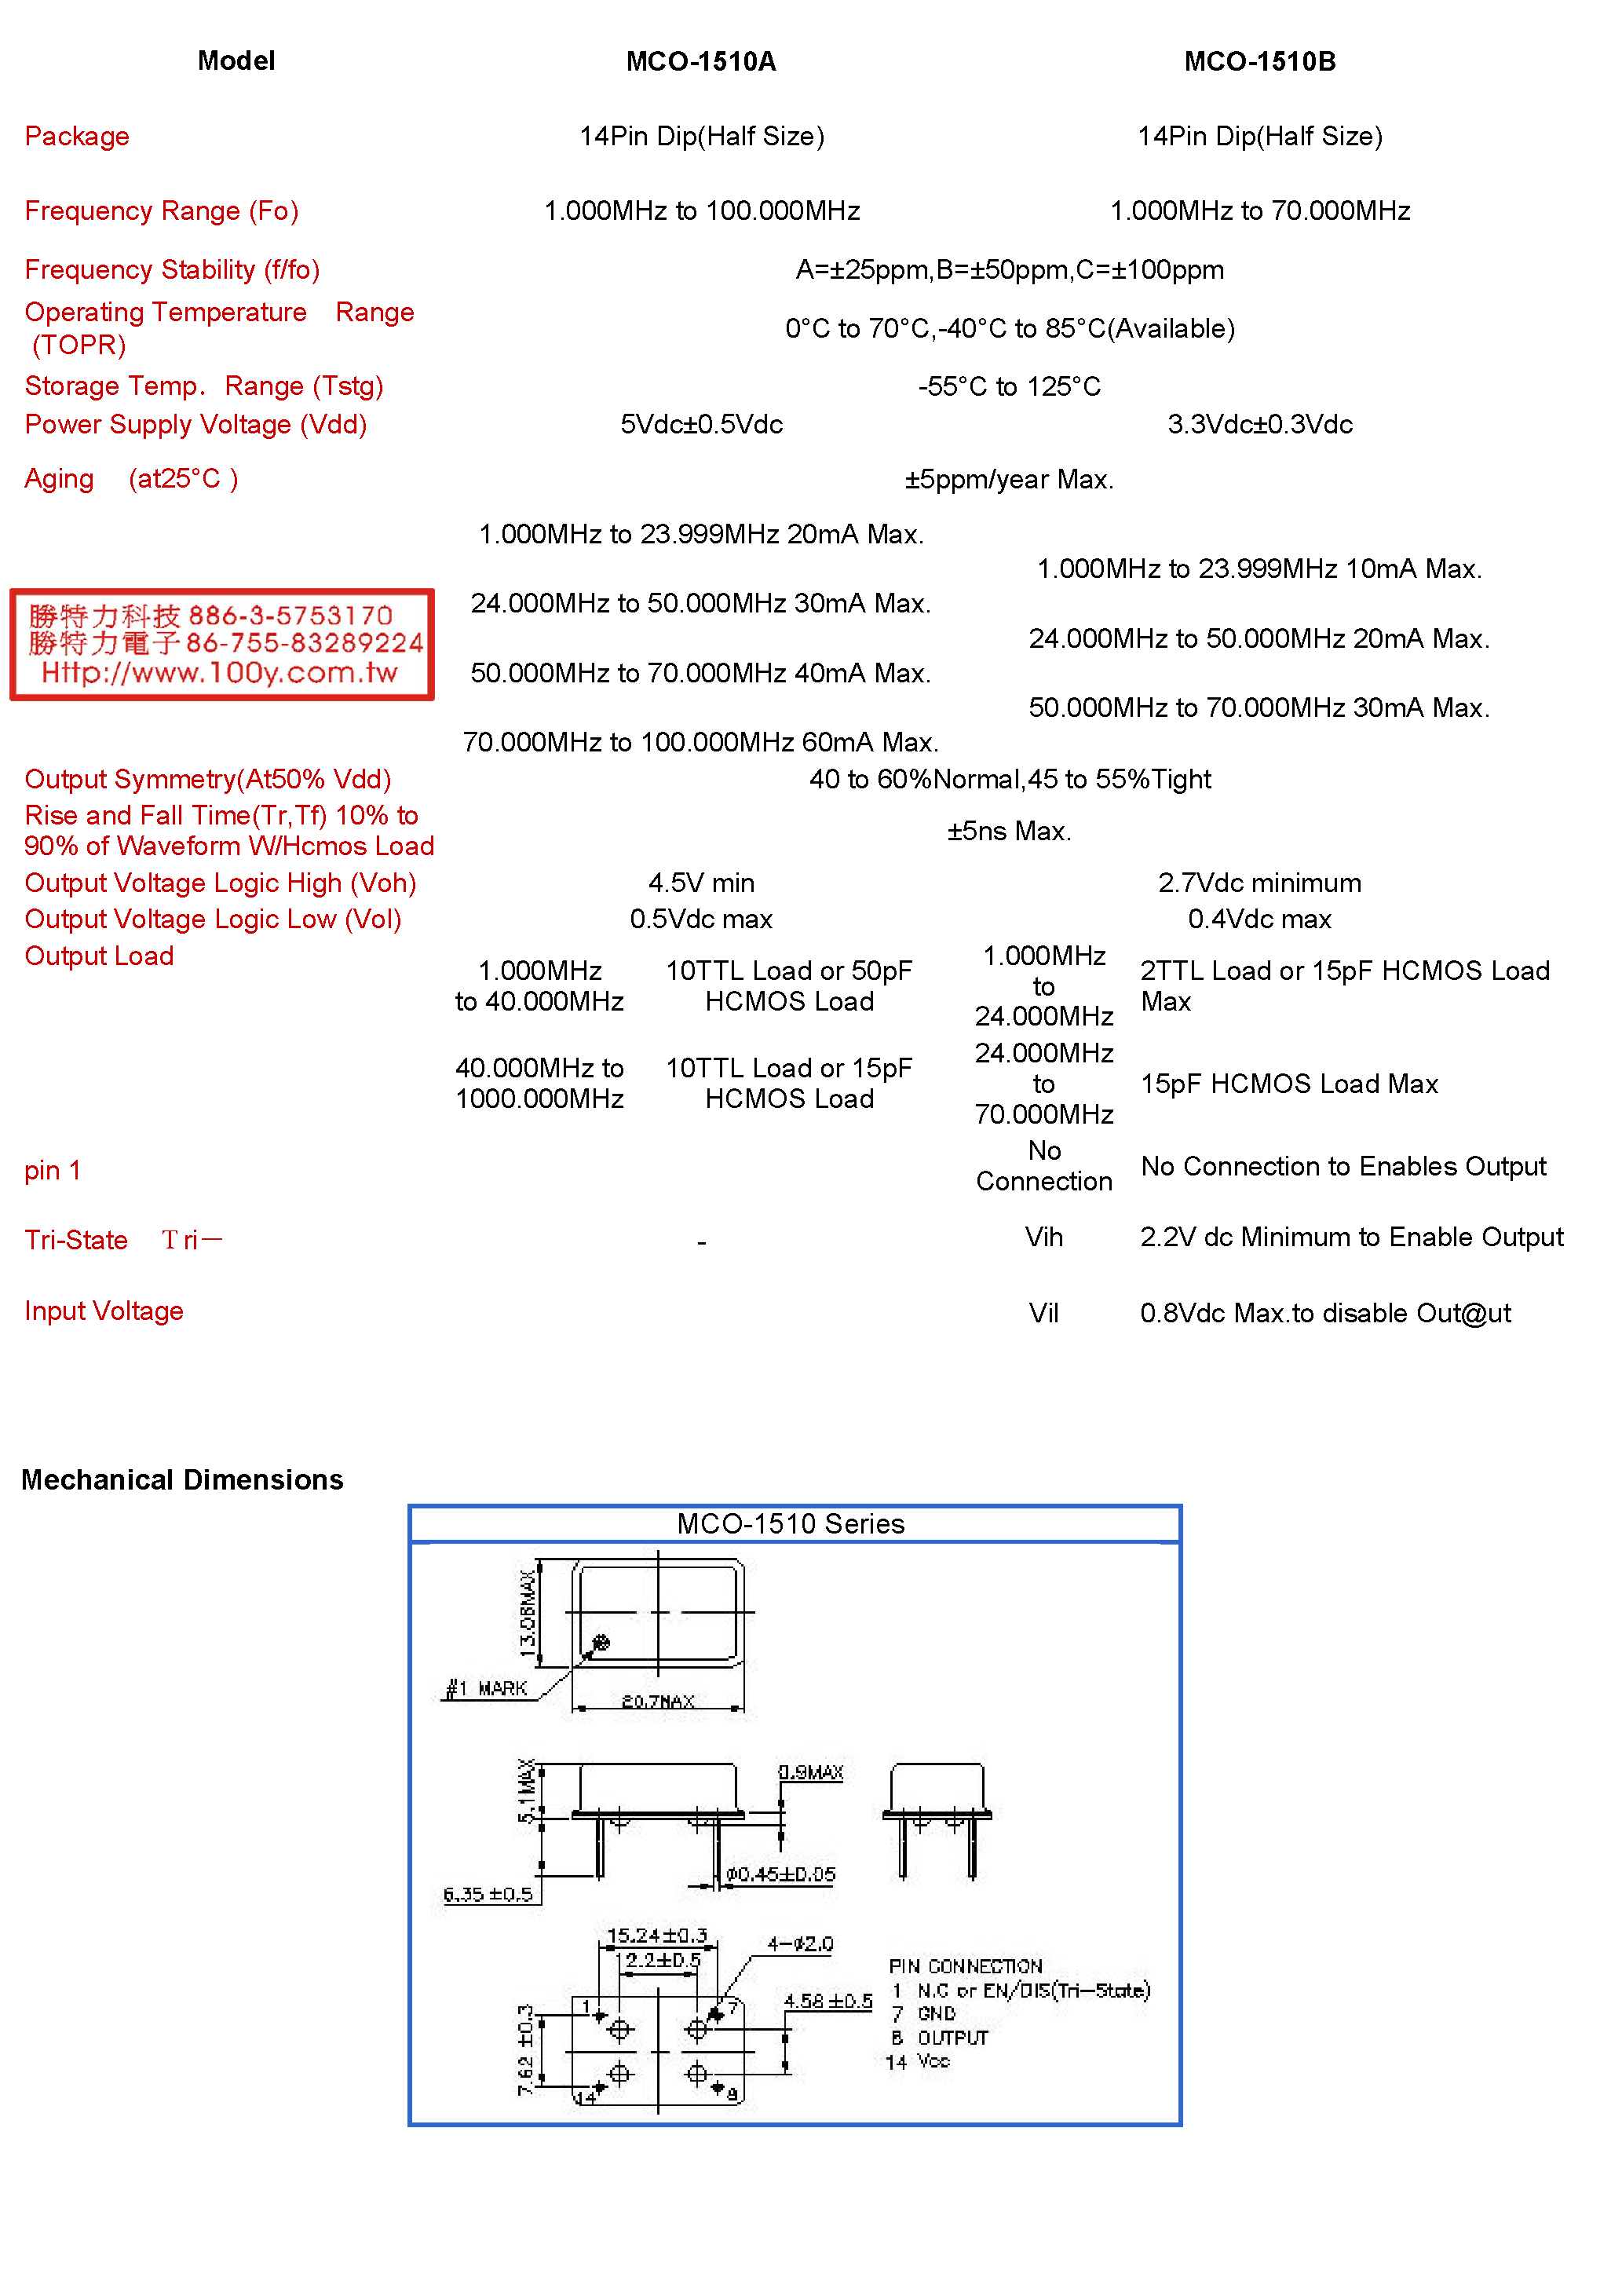 Datasheet MCO-1510A - (MCO-1510A/B) 14Pin Dip page 1